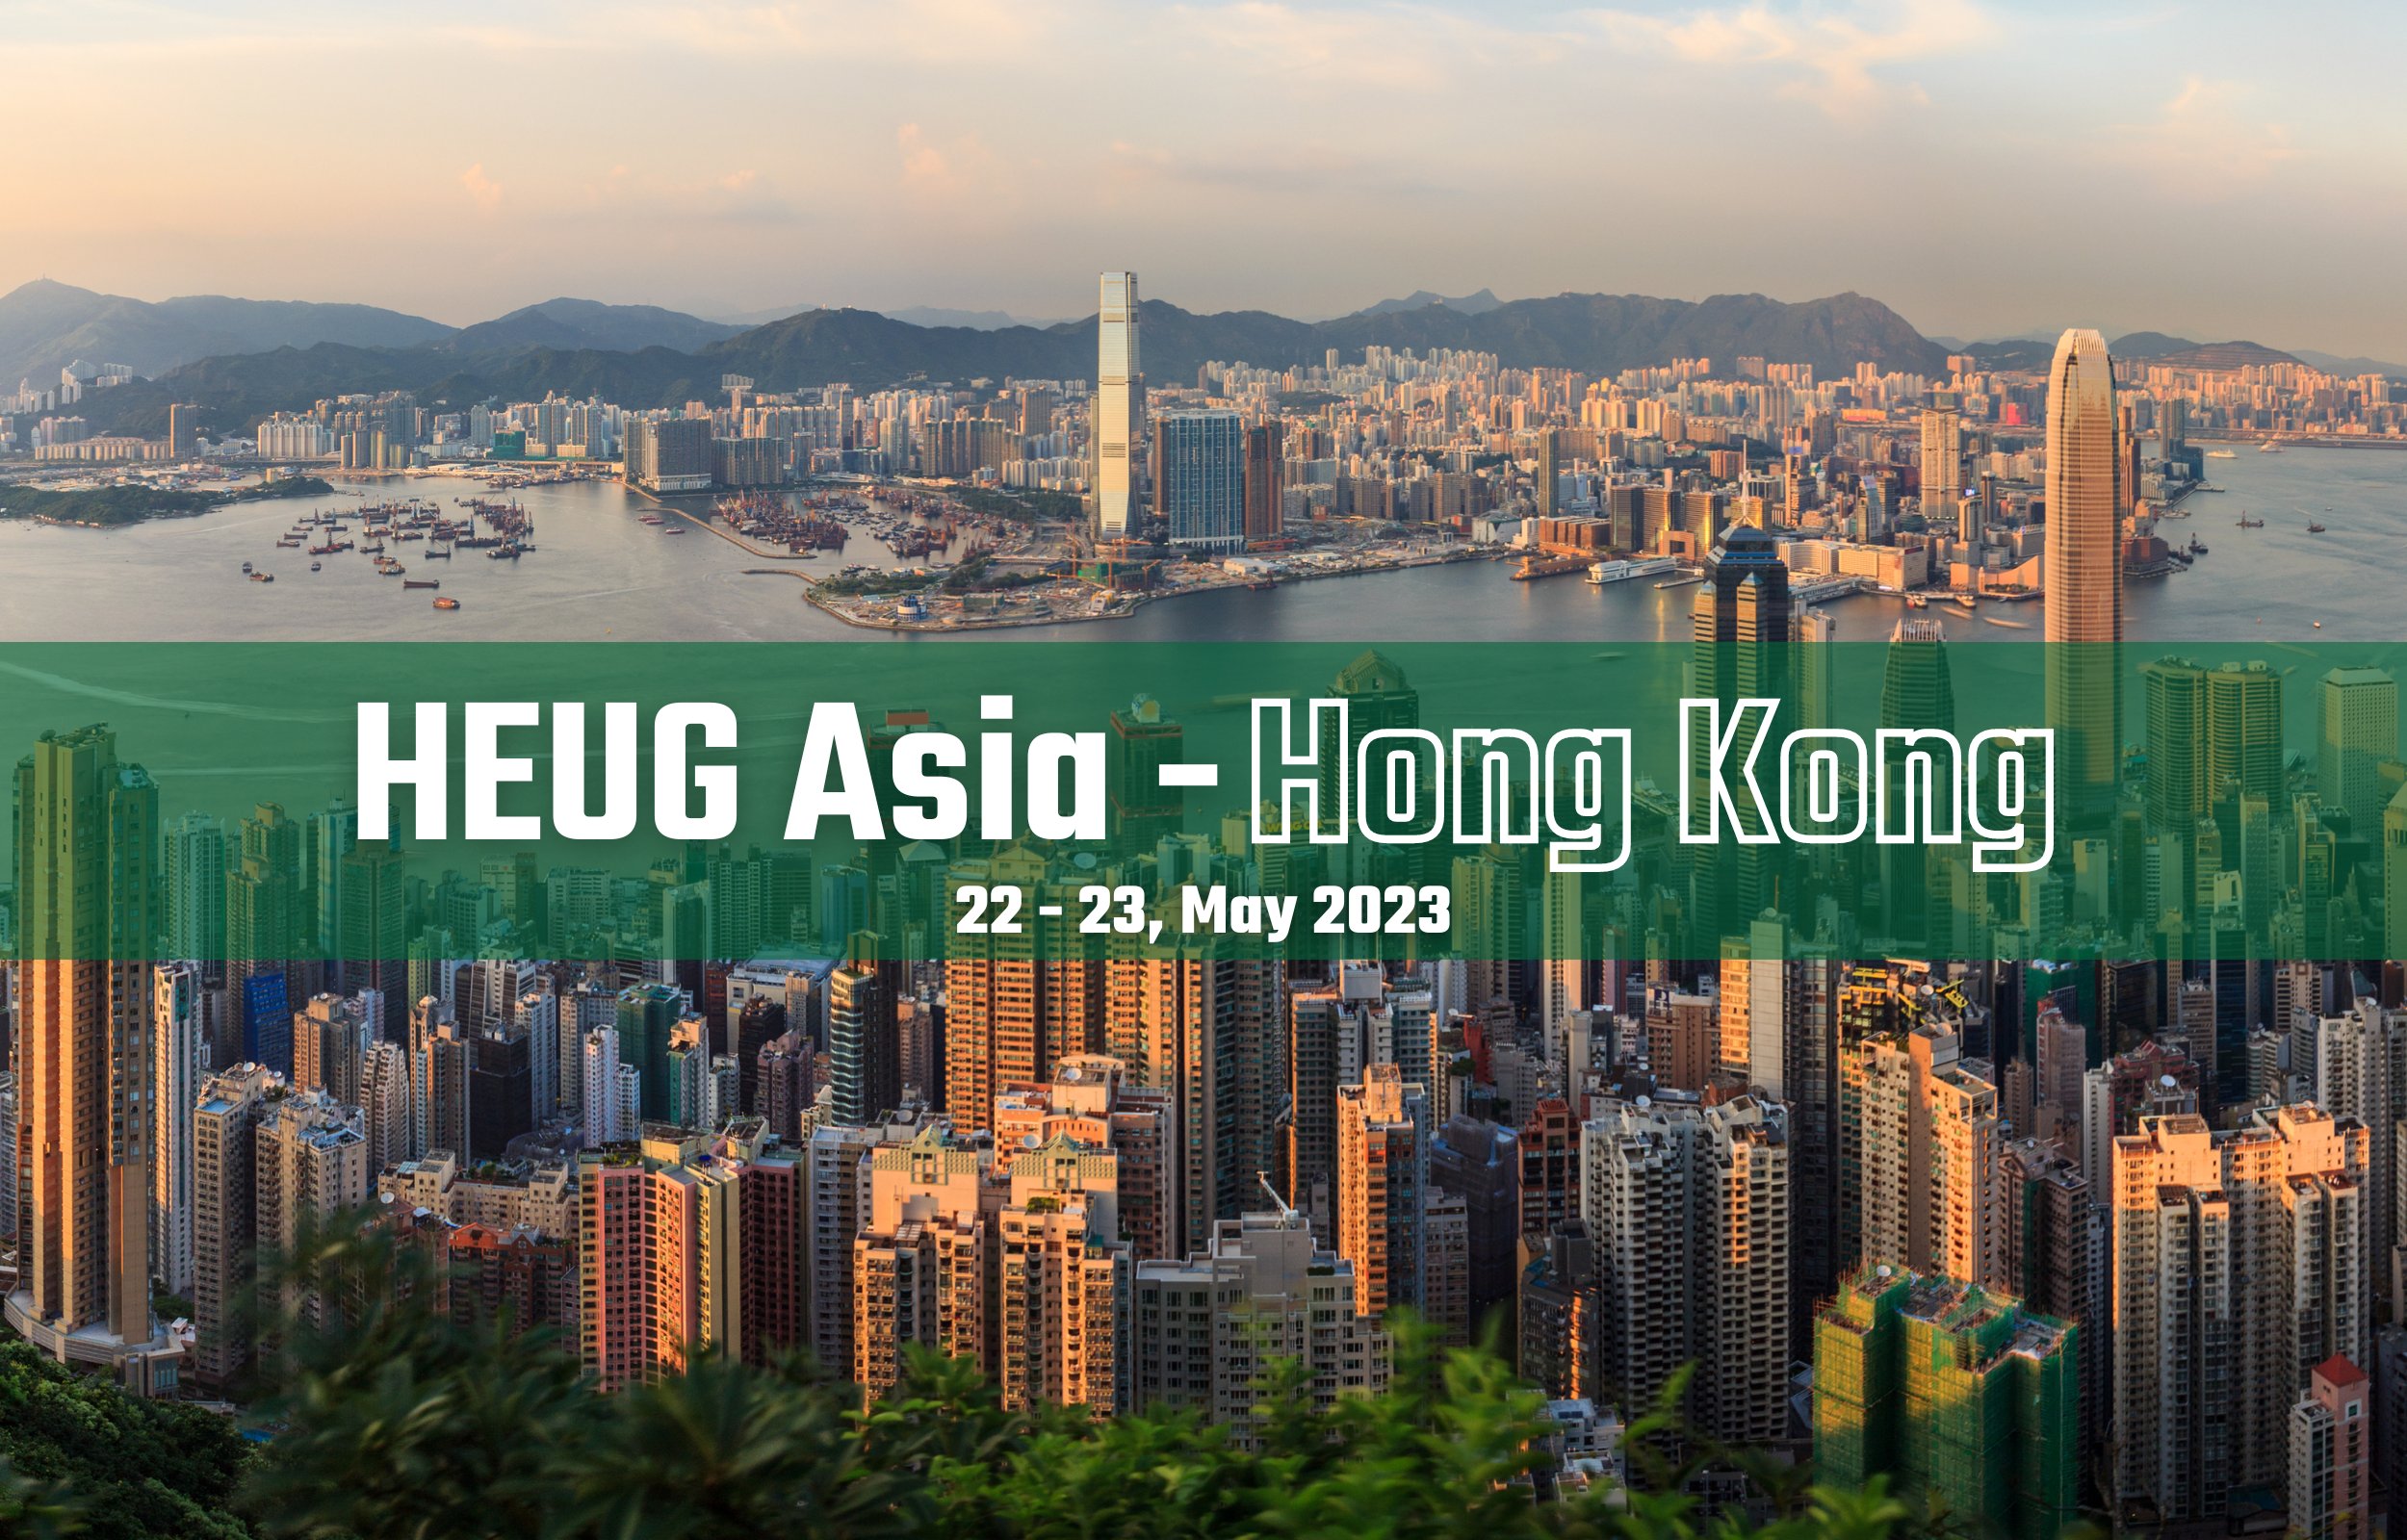 HEUG Asia - Hong Kong